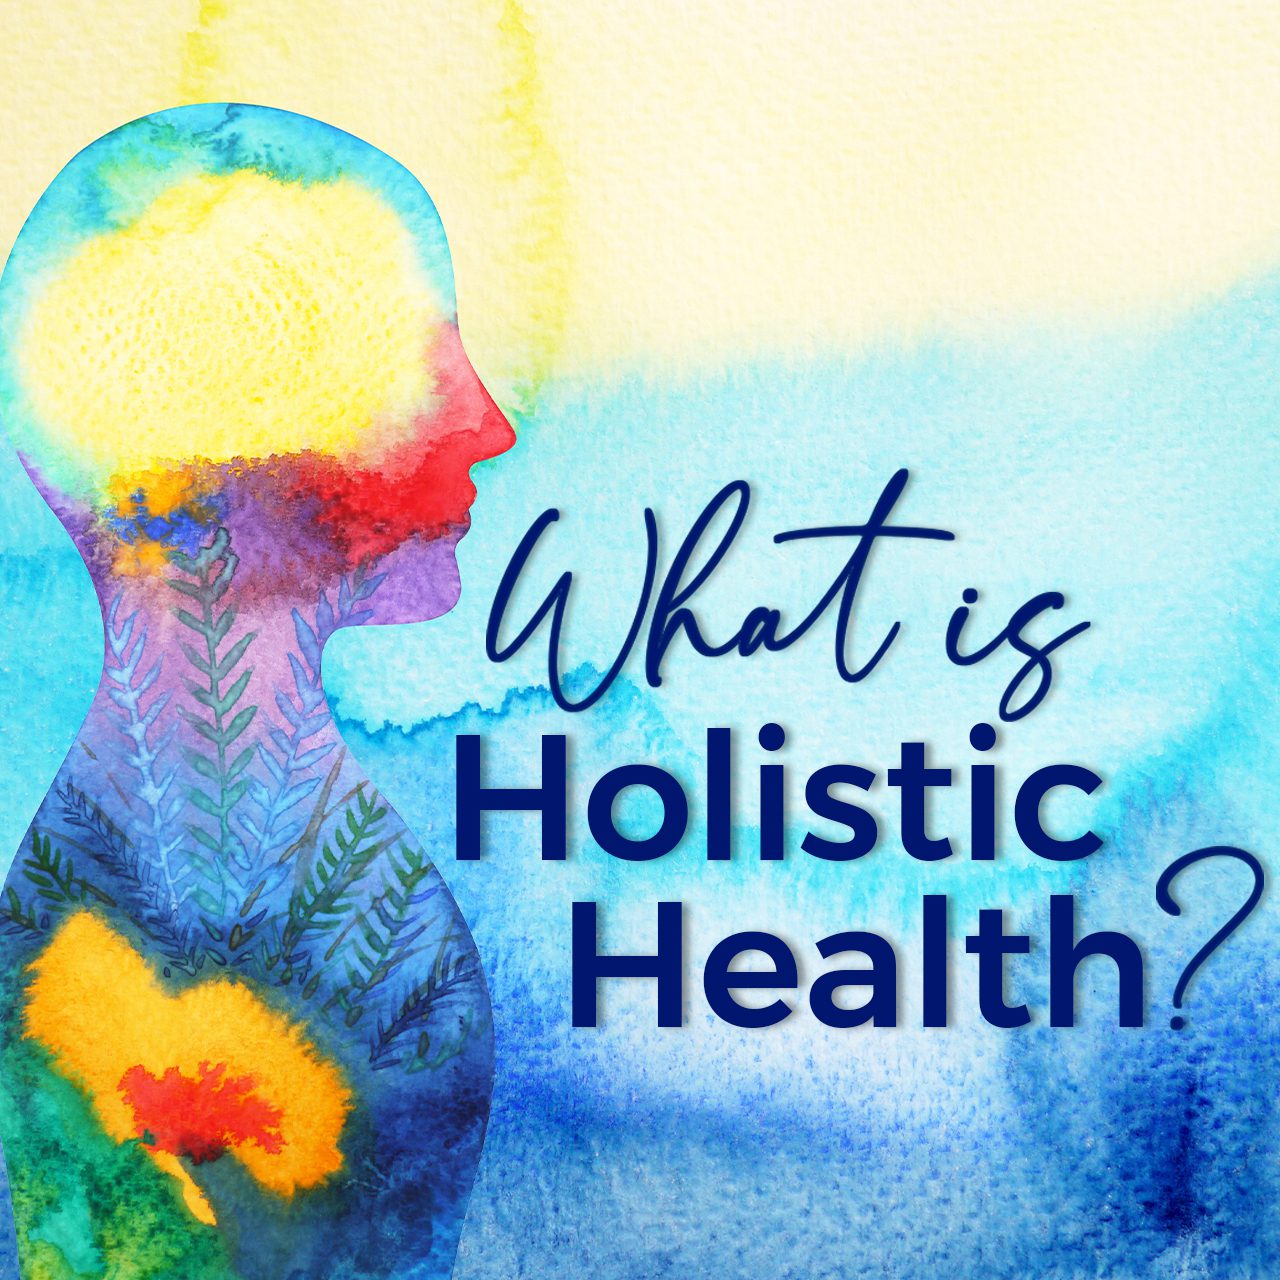 phd in holistic health online